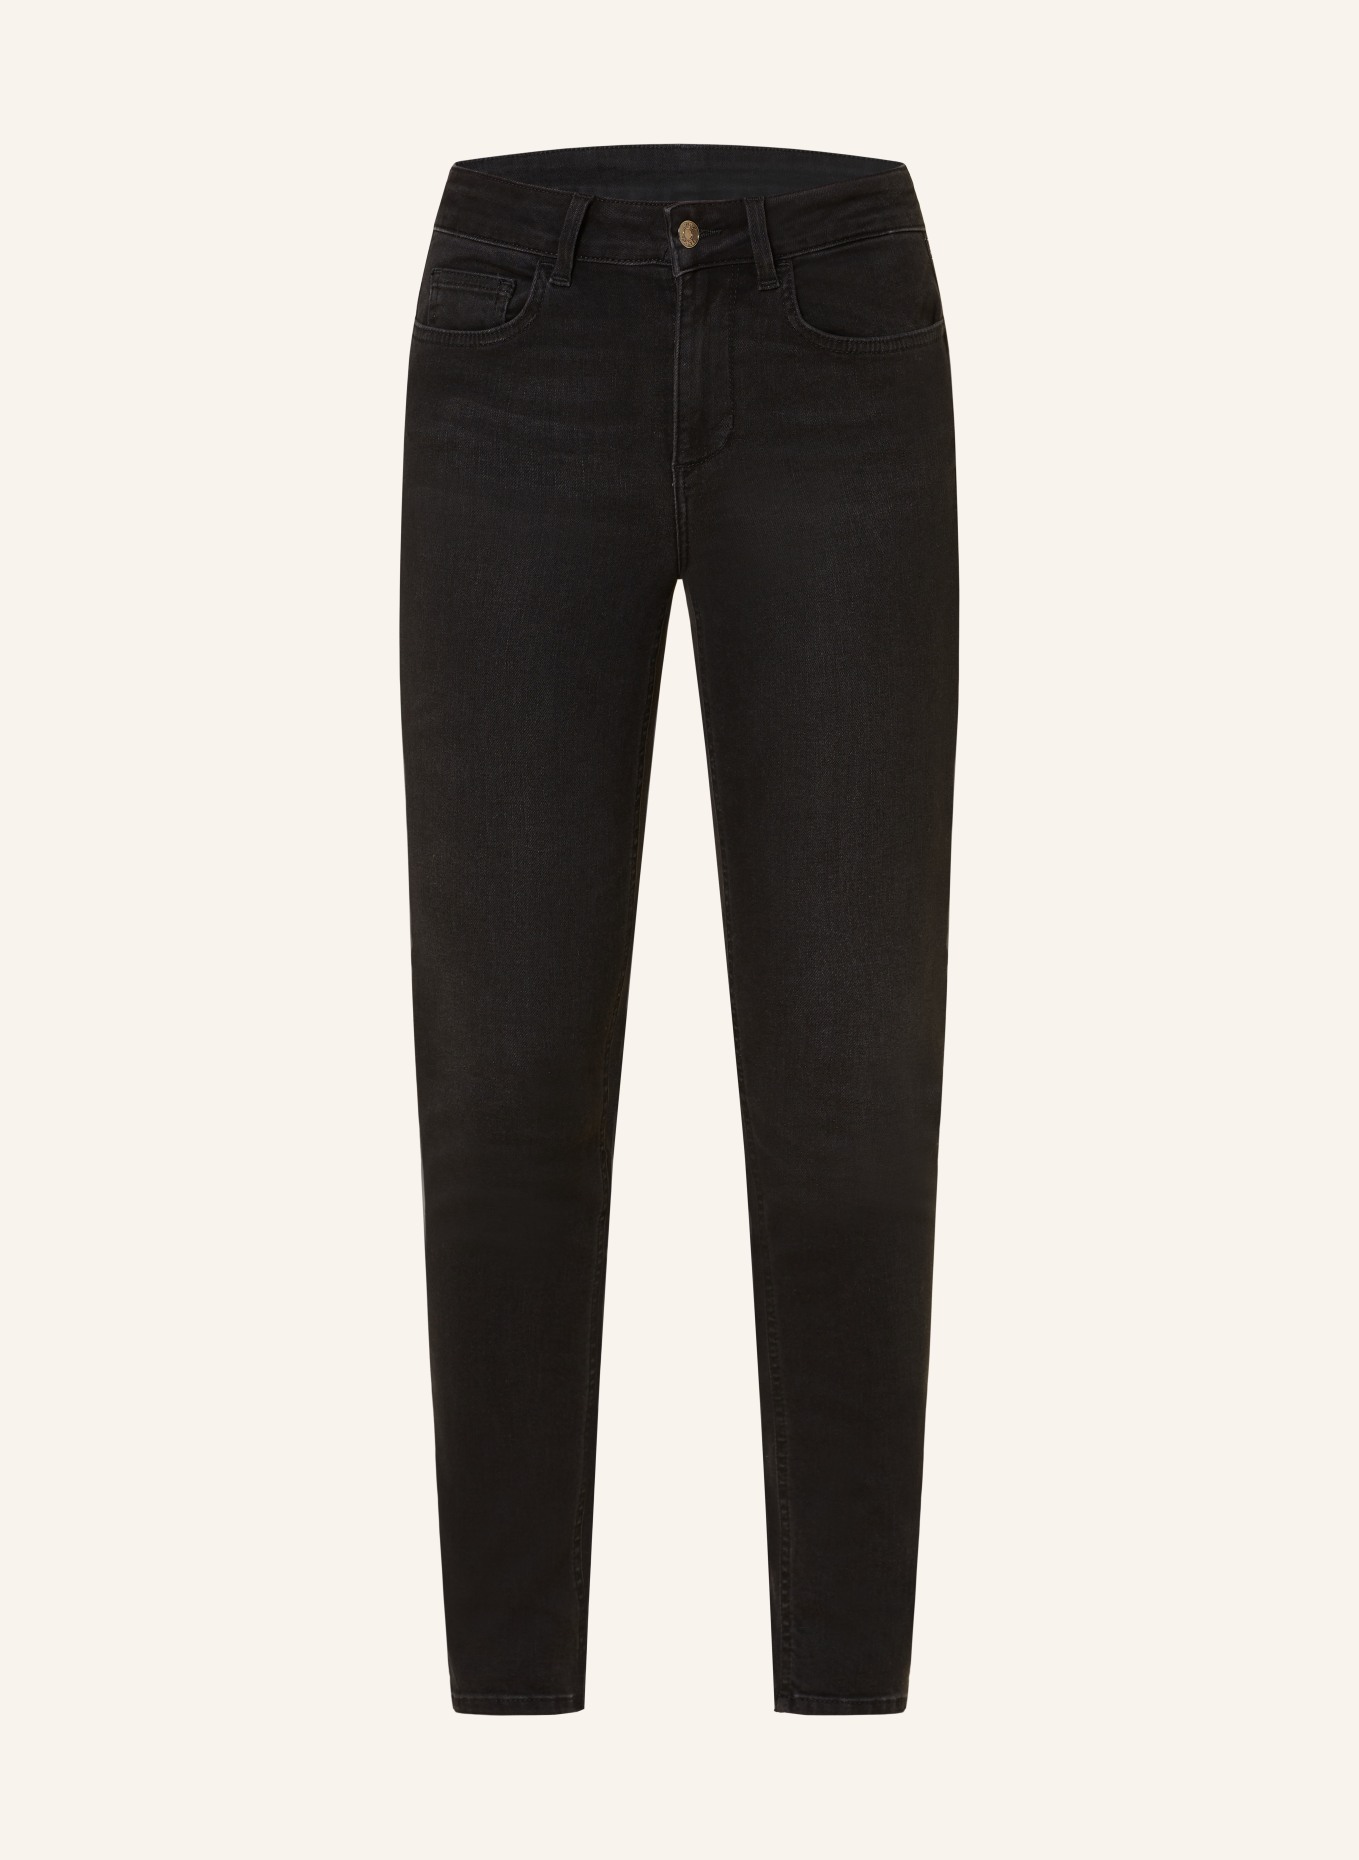 LIU JO Skinny jeans with decorative gems, Color: 87353 Den.Black winner was (Image 1)